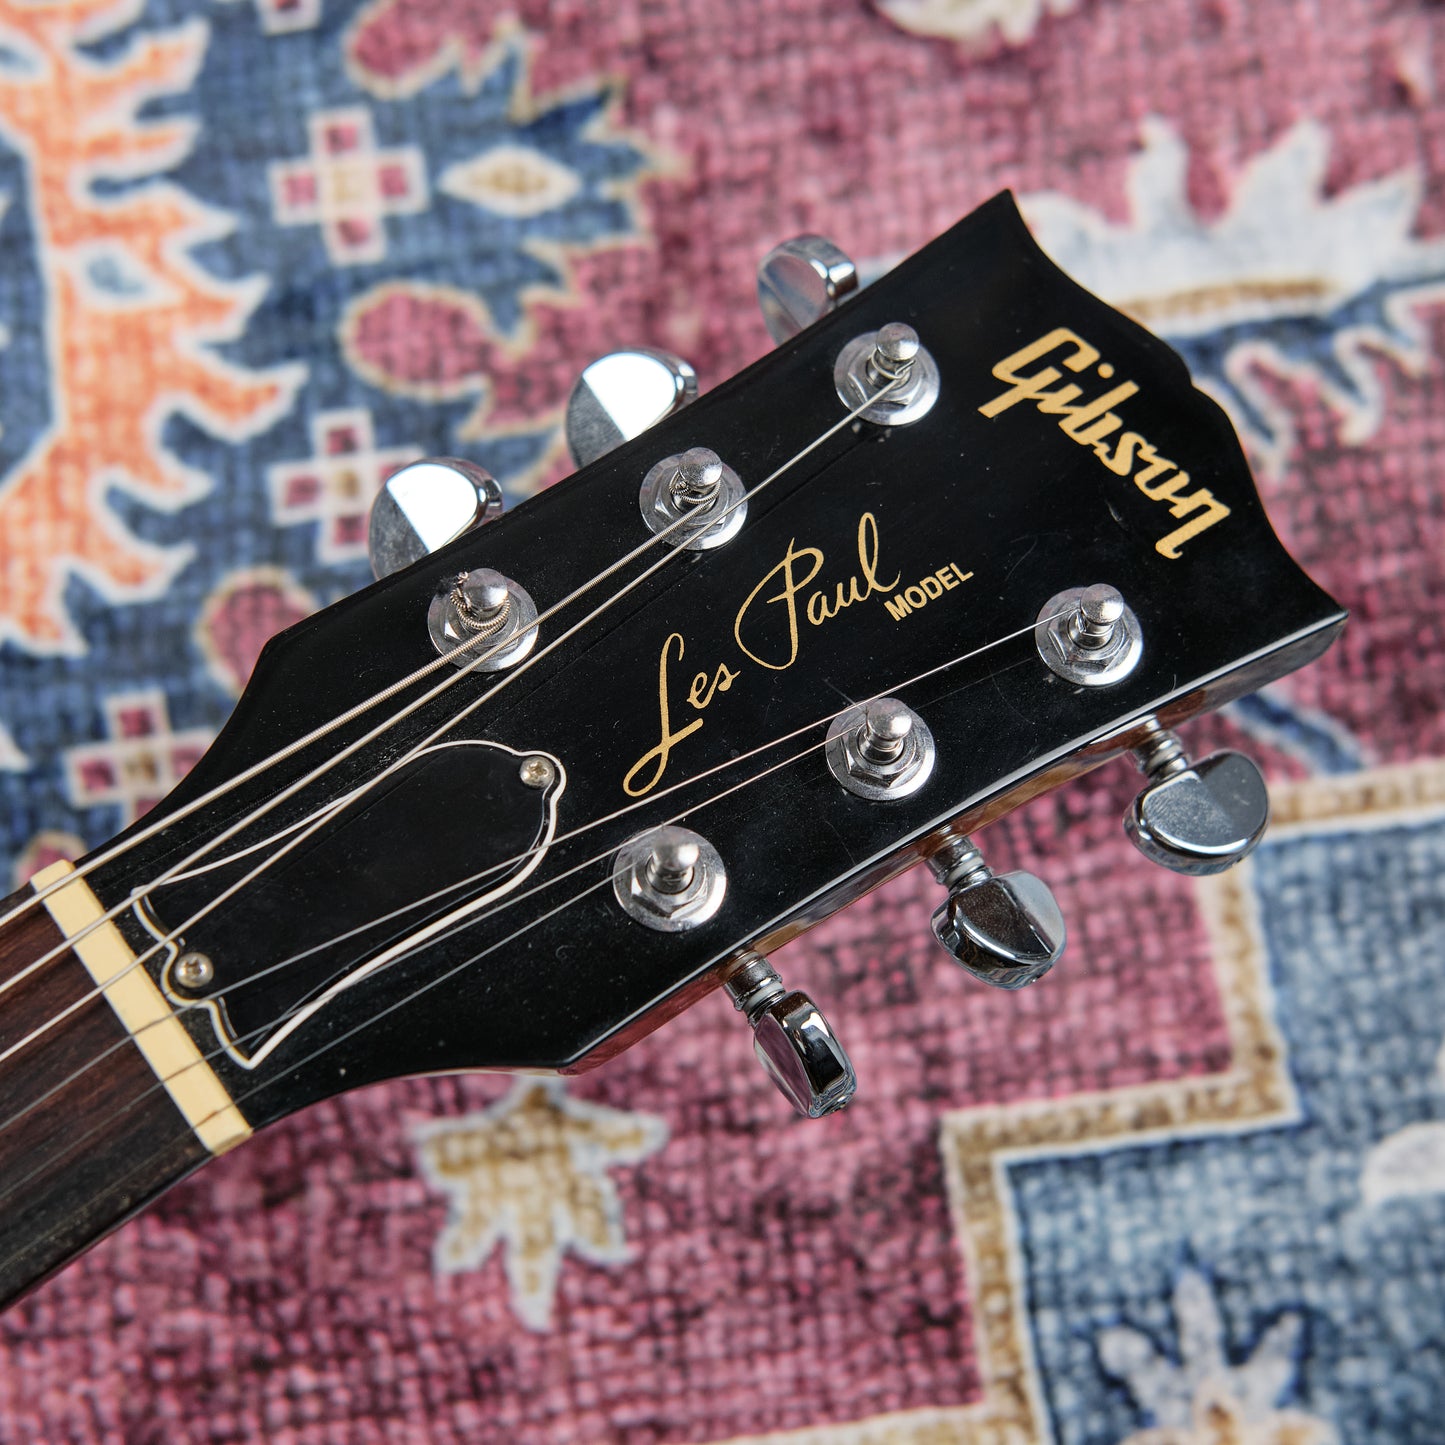 2015 Gibson Les Paul Studio Plus Honeyburst